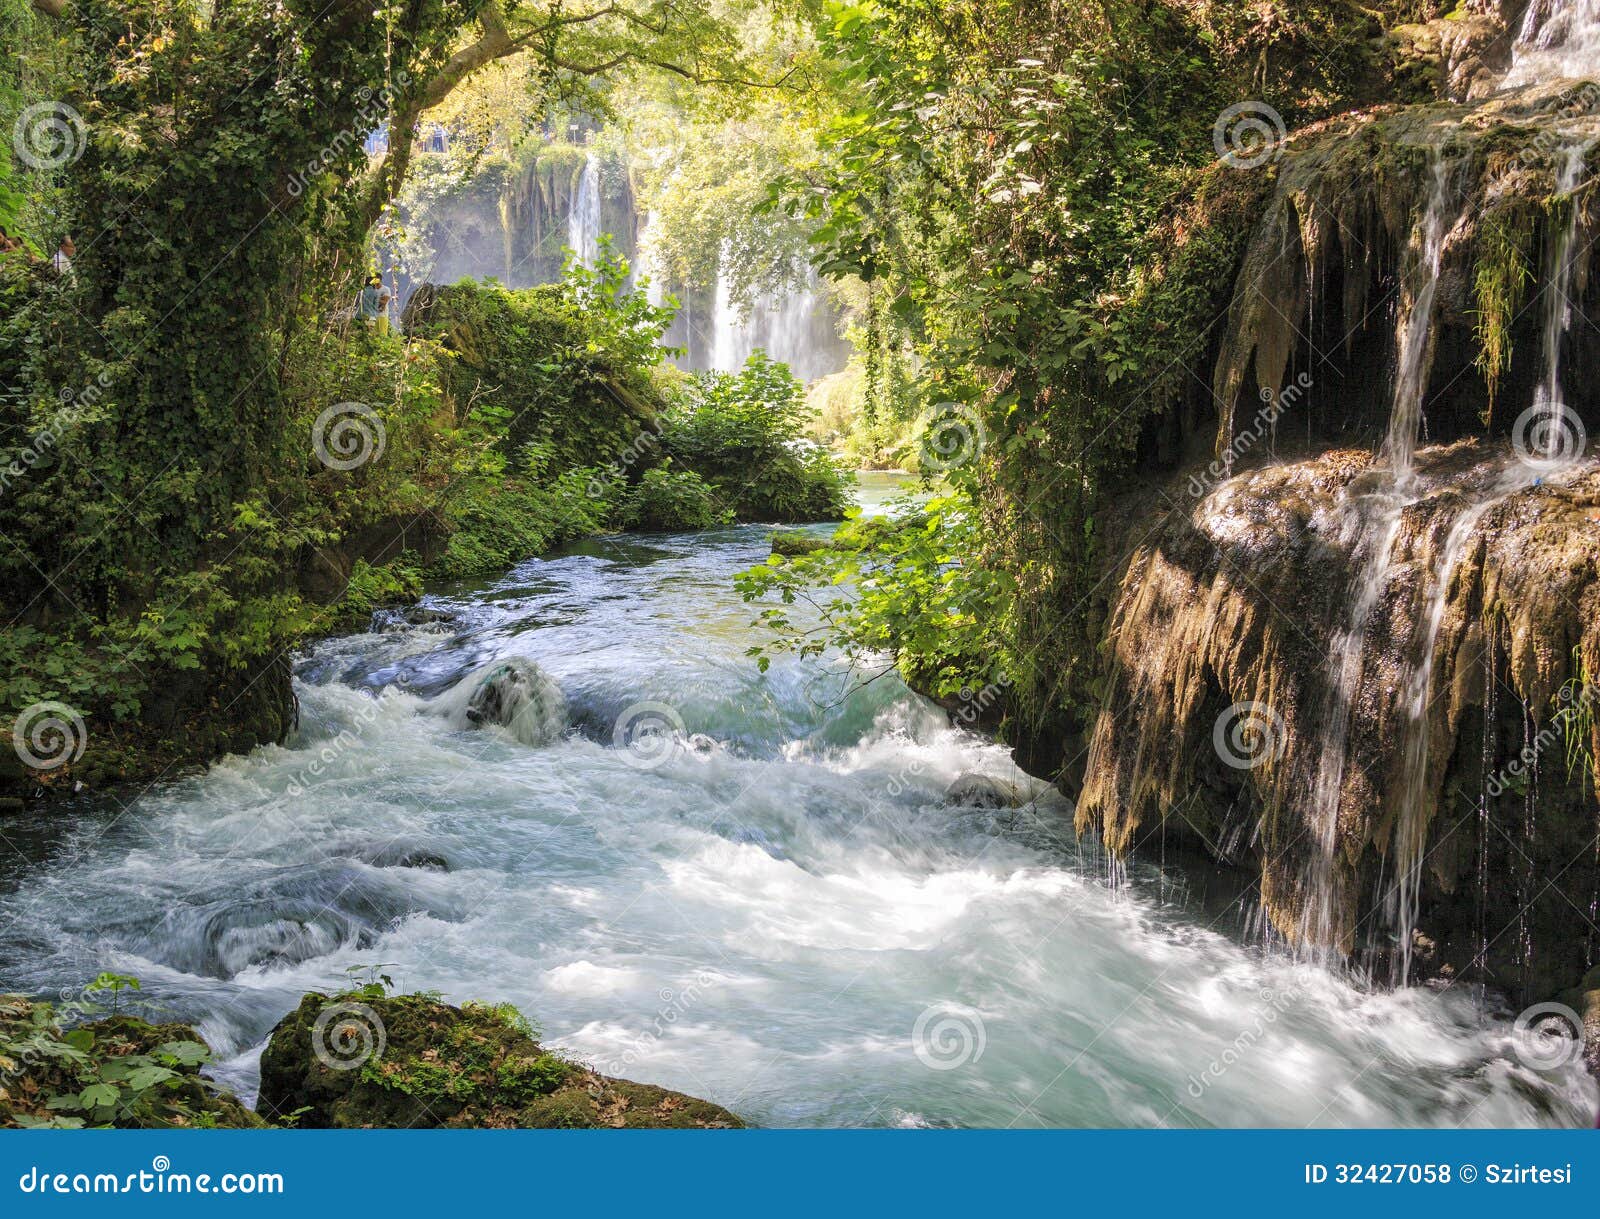 waterfall in antalya